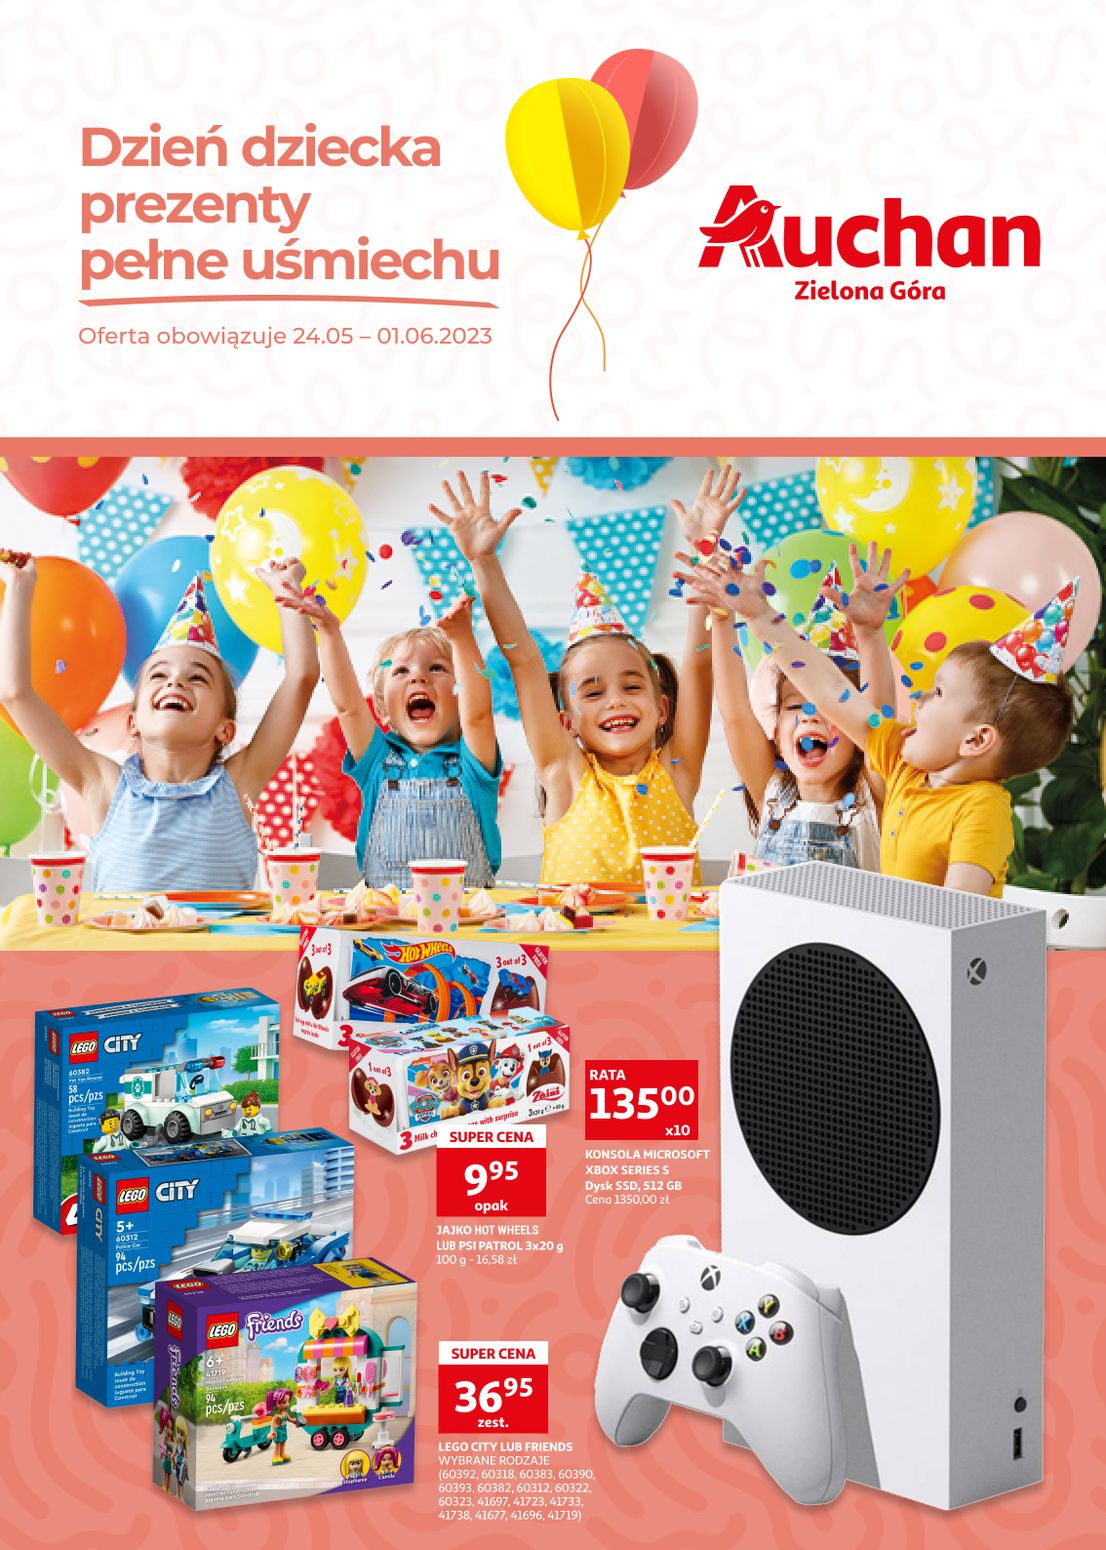 акційний каталог Auchan – Dzień dziecka - Zielona Góra - Сторінка 1